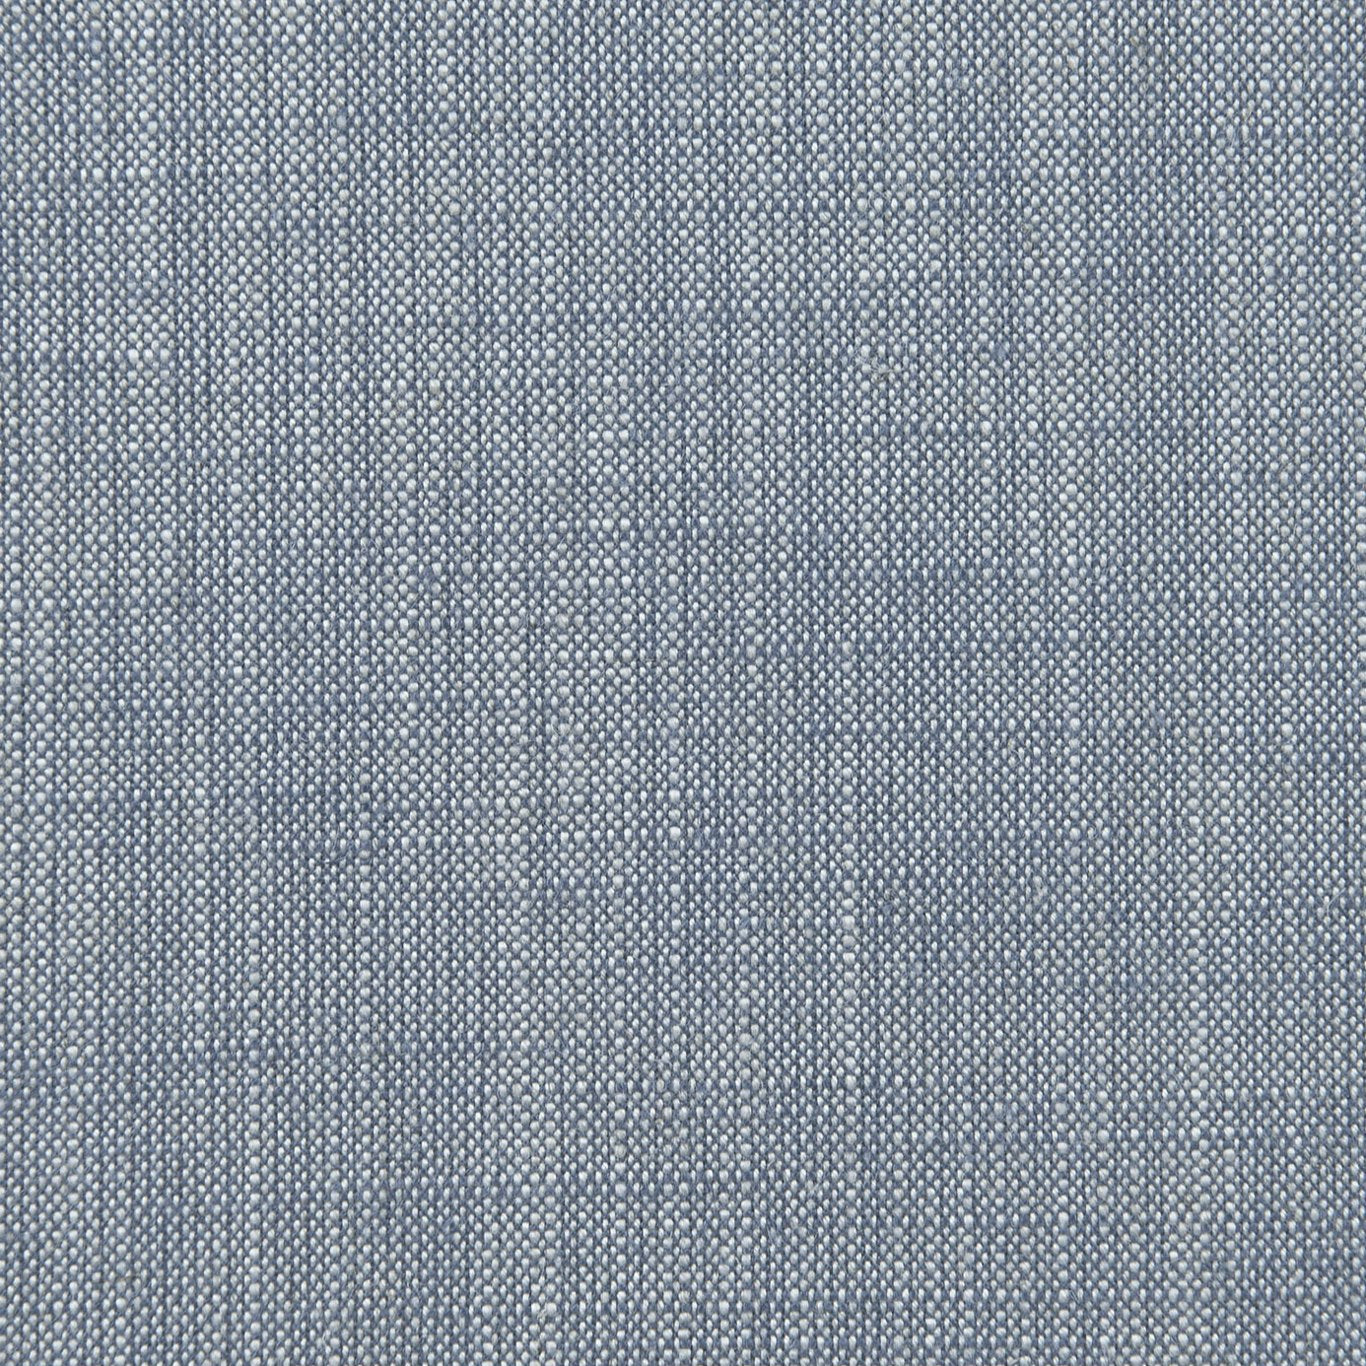 Biarritz Fabric by Clarke & Clarke - F0965/28 - Mediterranean